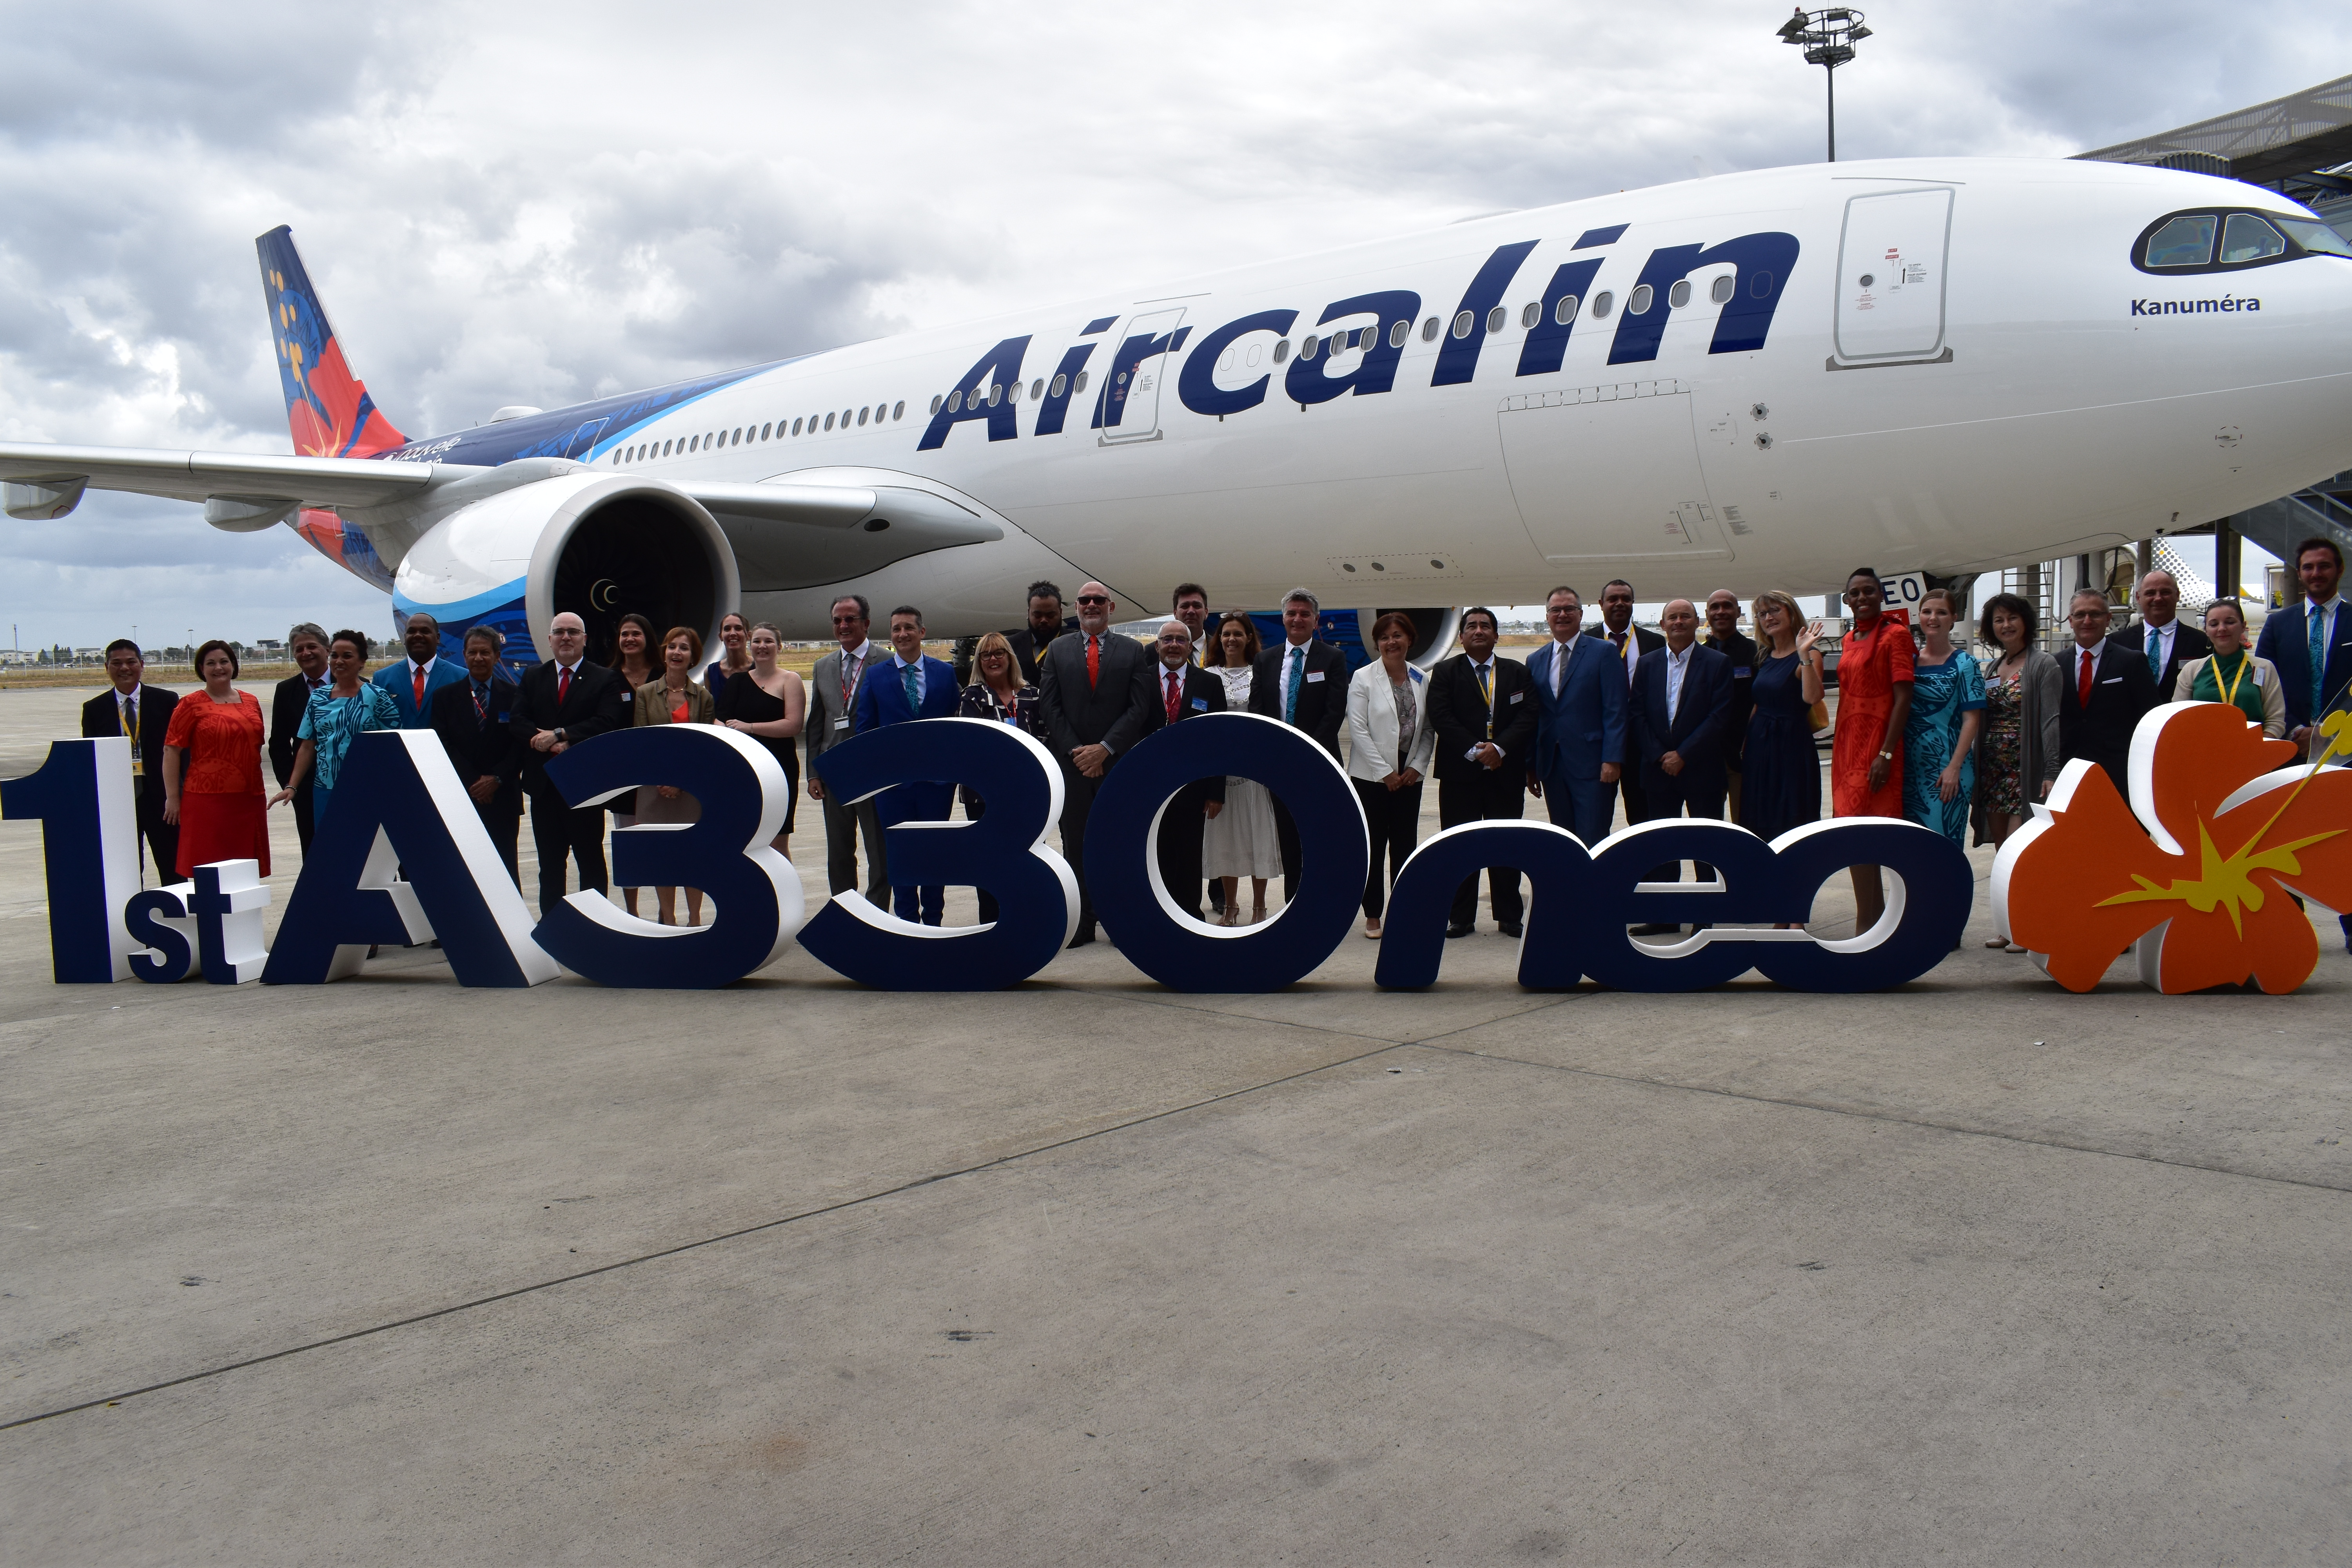 Desserte aérienne : Aircalin réceptionne «Kanuméra», son premier A330neo